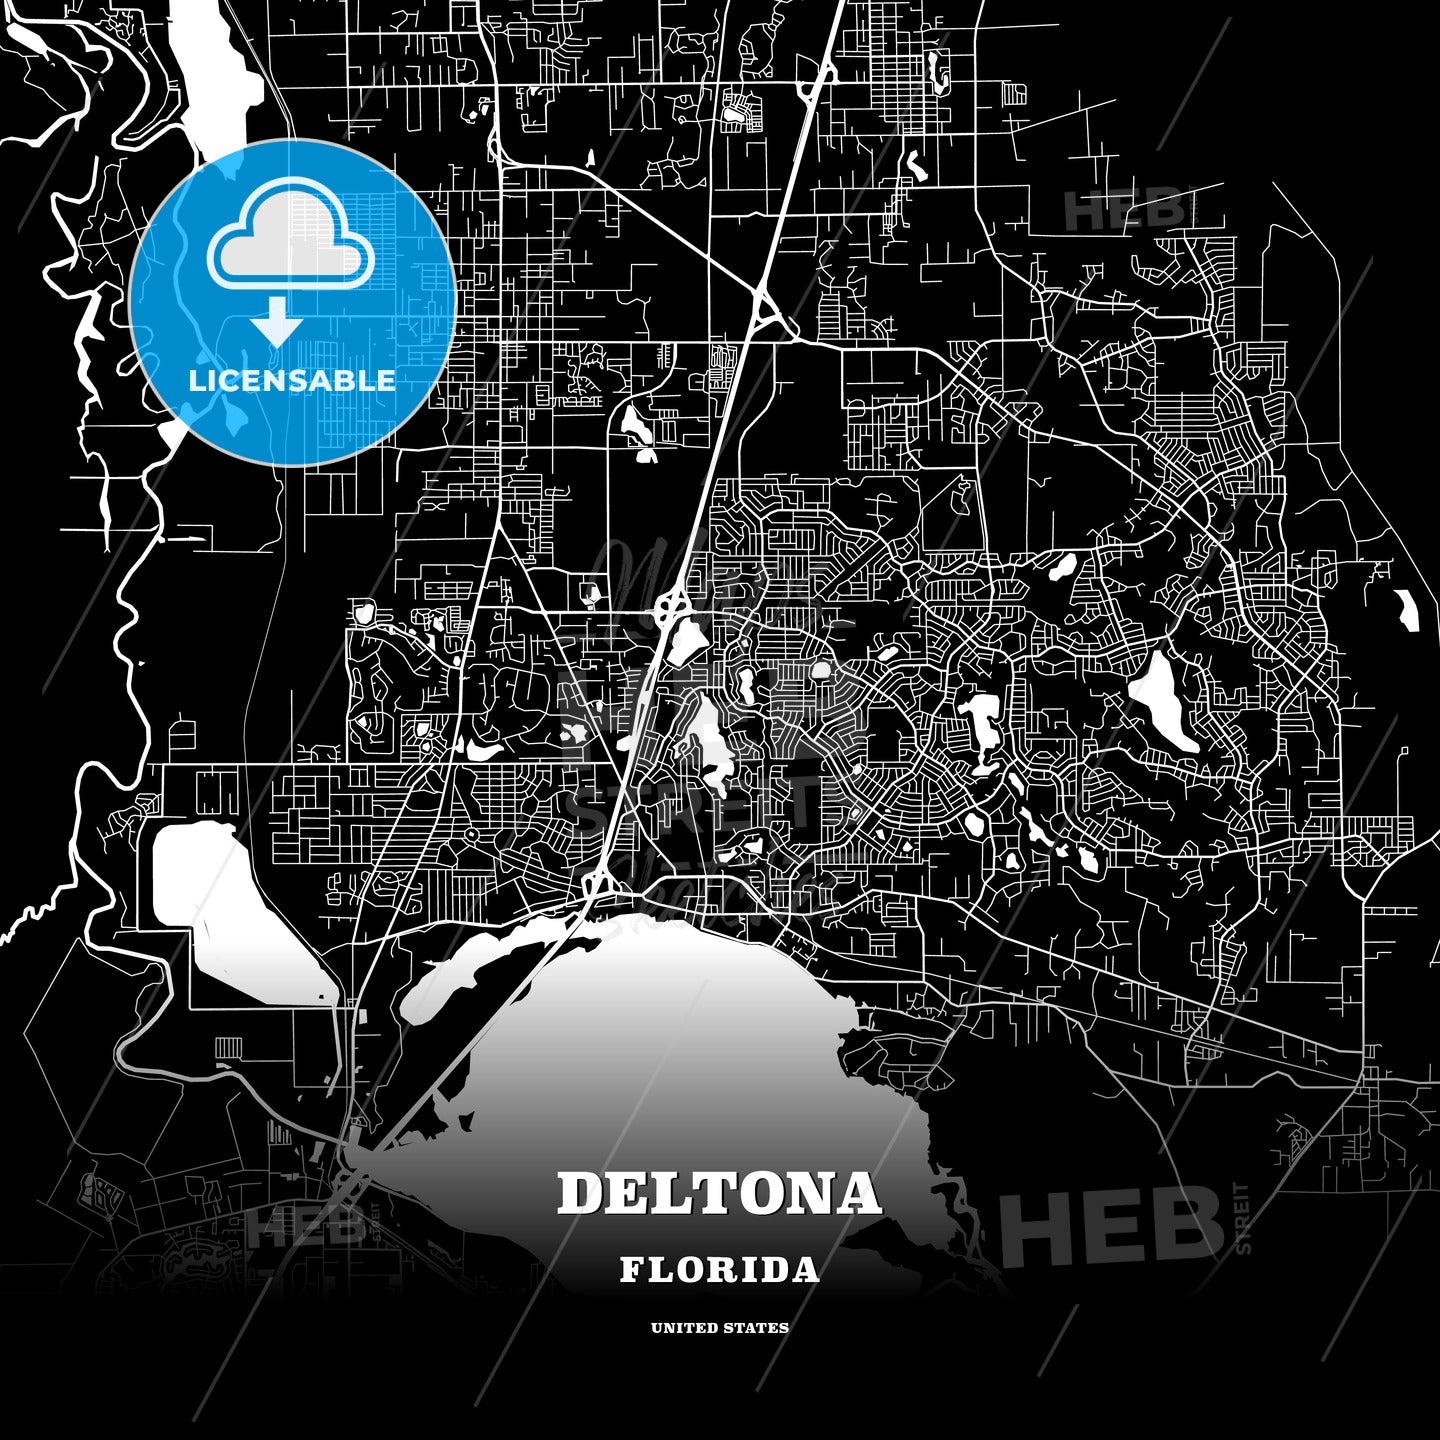 Deltona, Florida, USA map